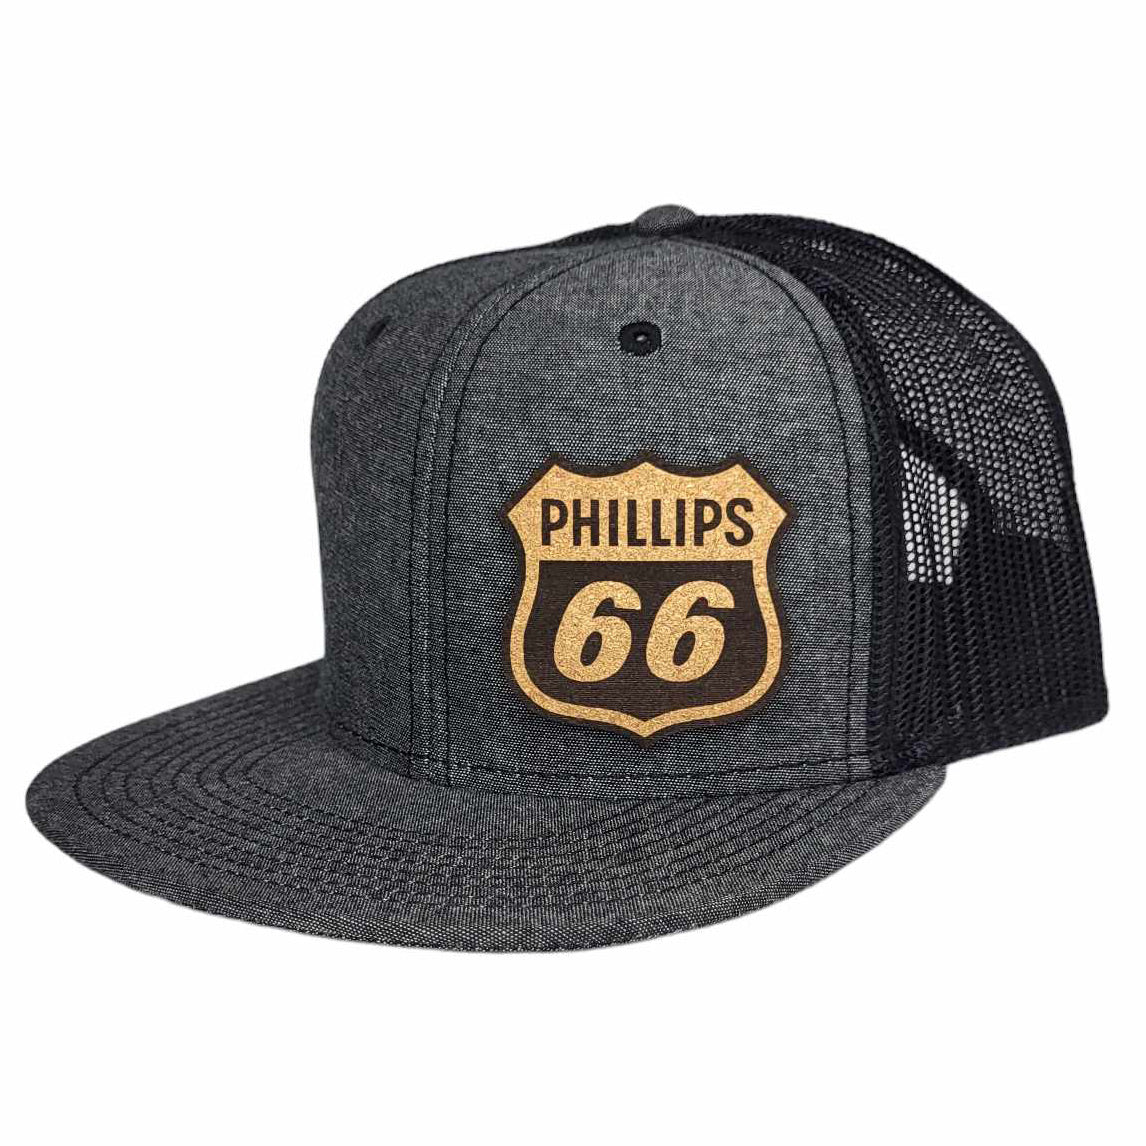 Phillips 66 Hat